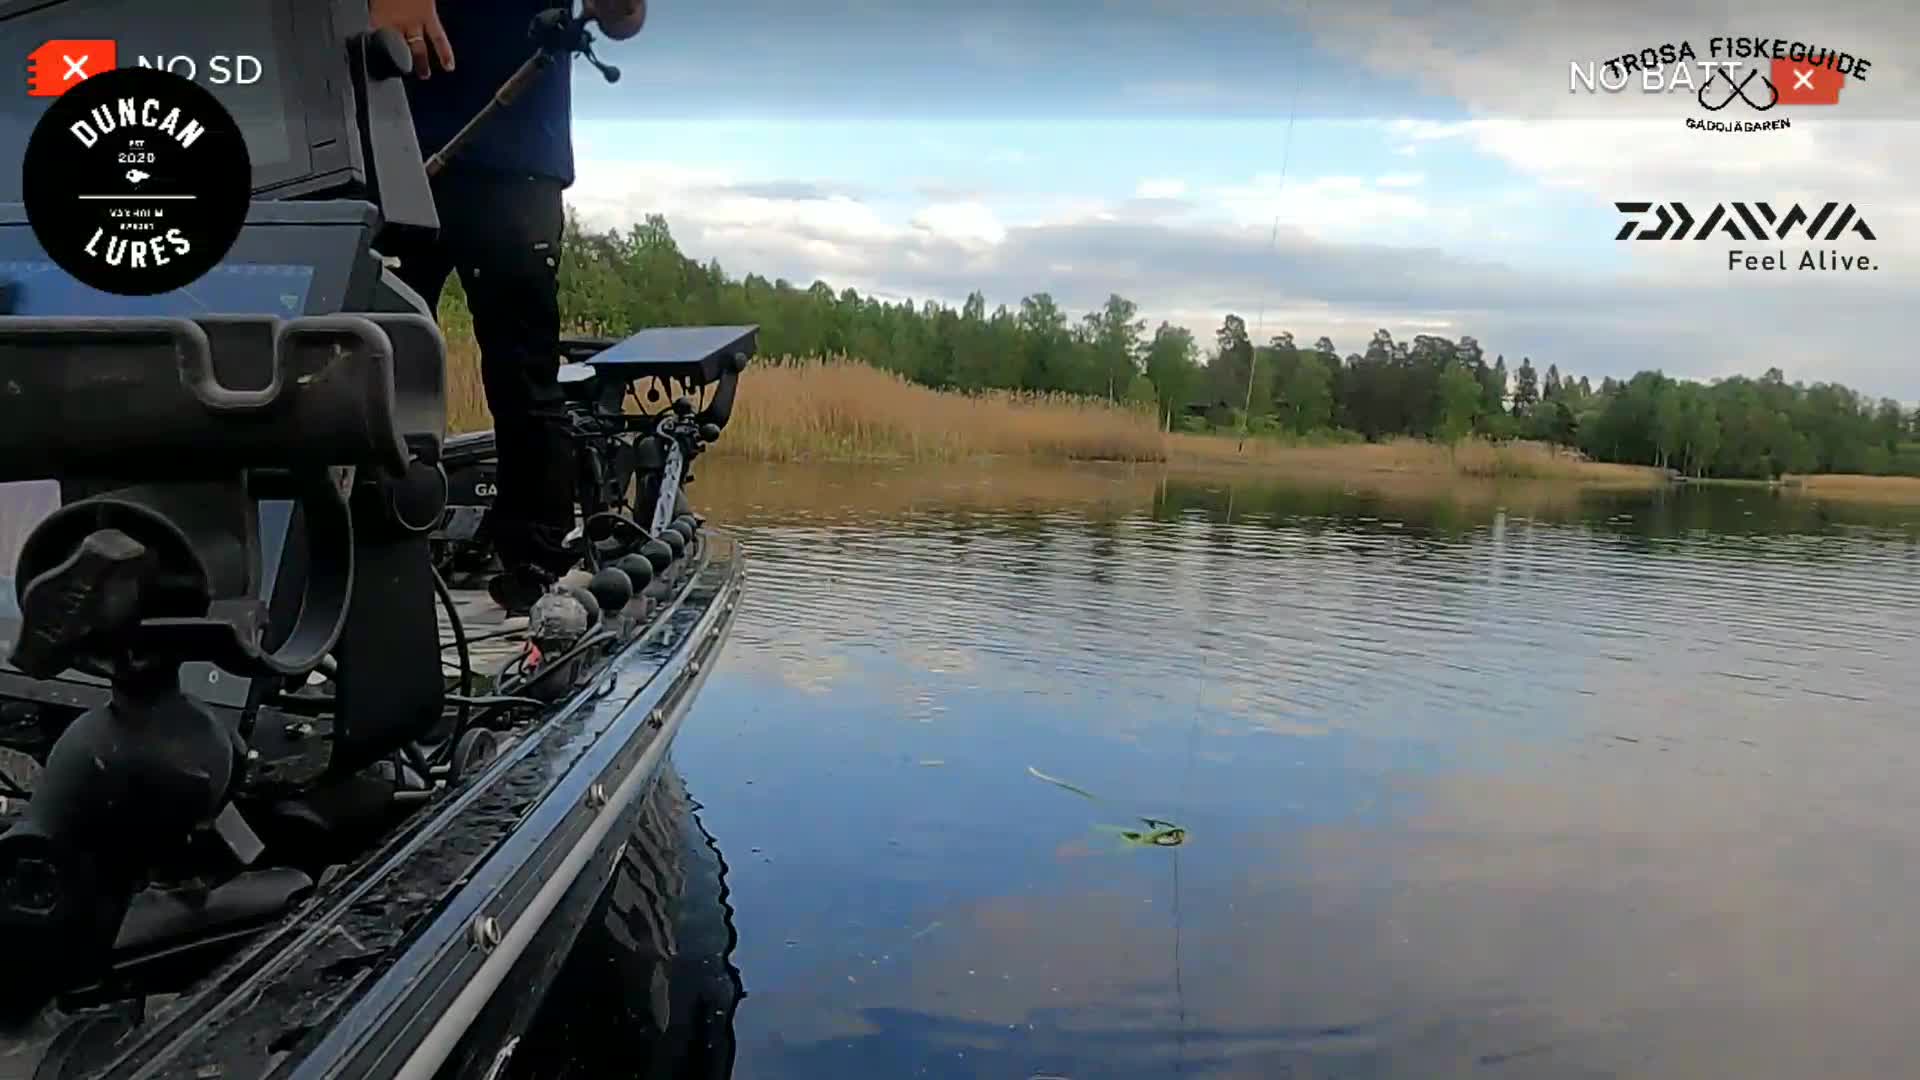 Pike fishing with Duncan Lures and Gäddjägaren (Daiwa Prostaff)  - 2023-05-22 16:17:10